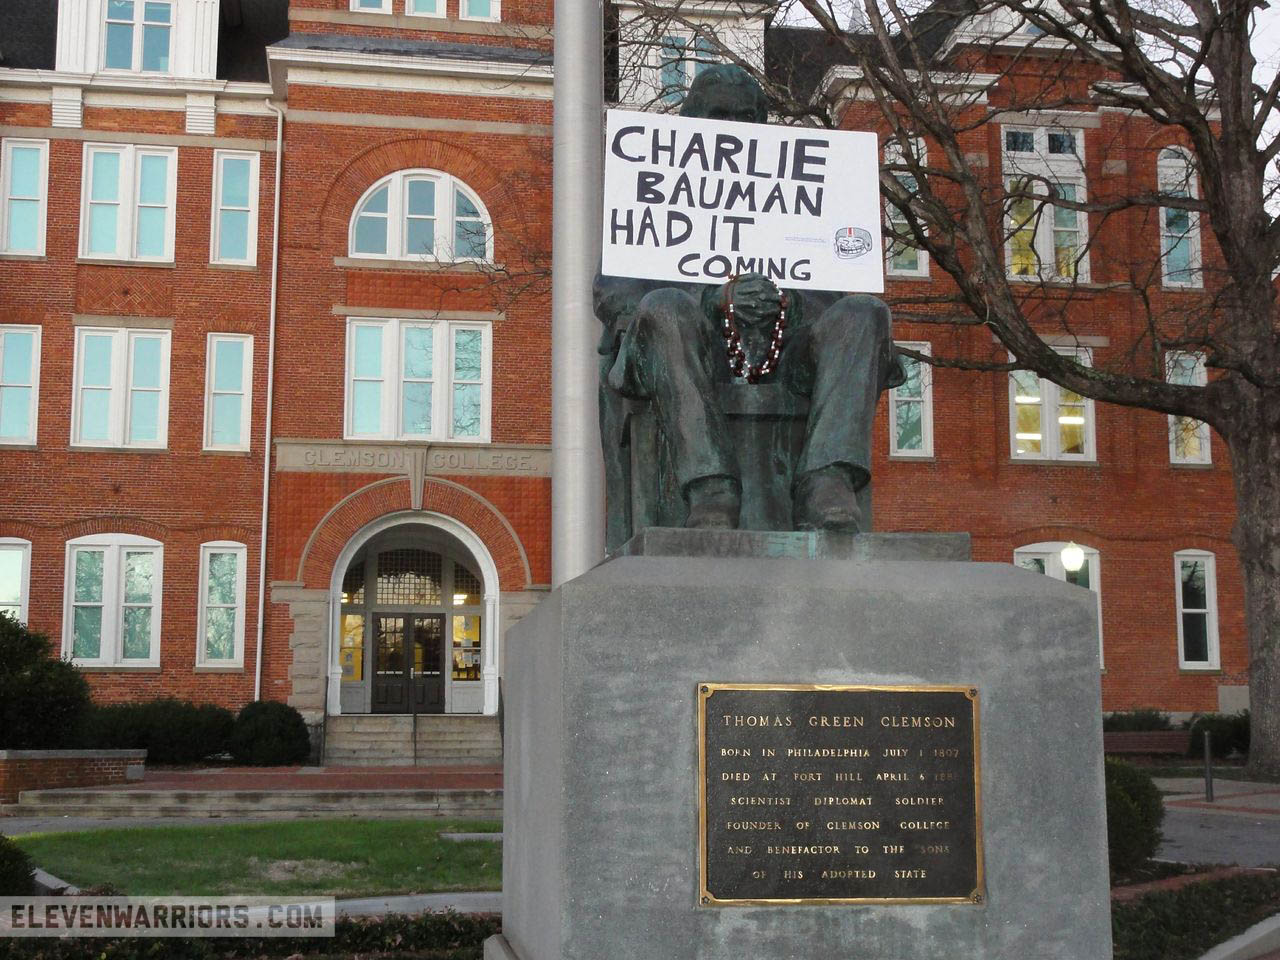 The Thomas Green Clemson Statue